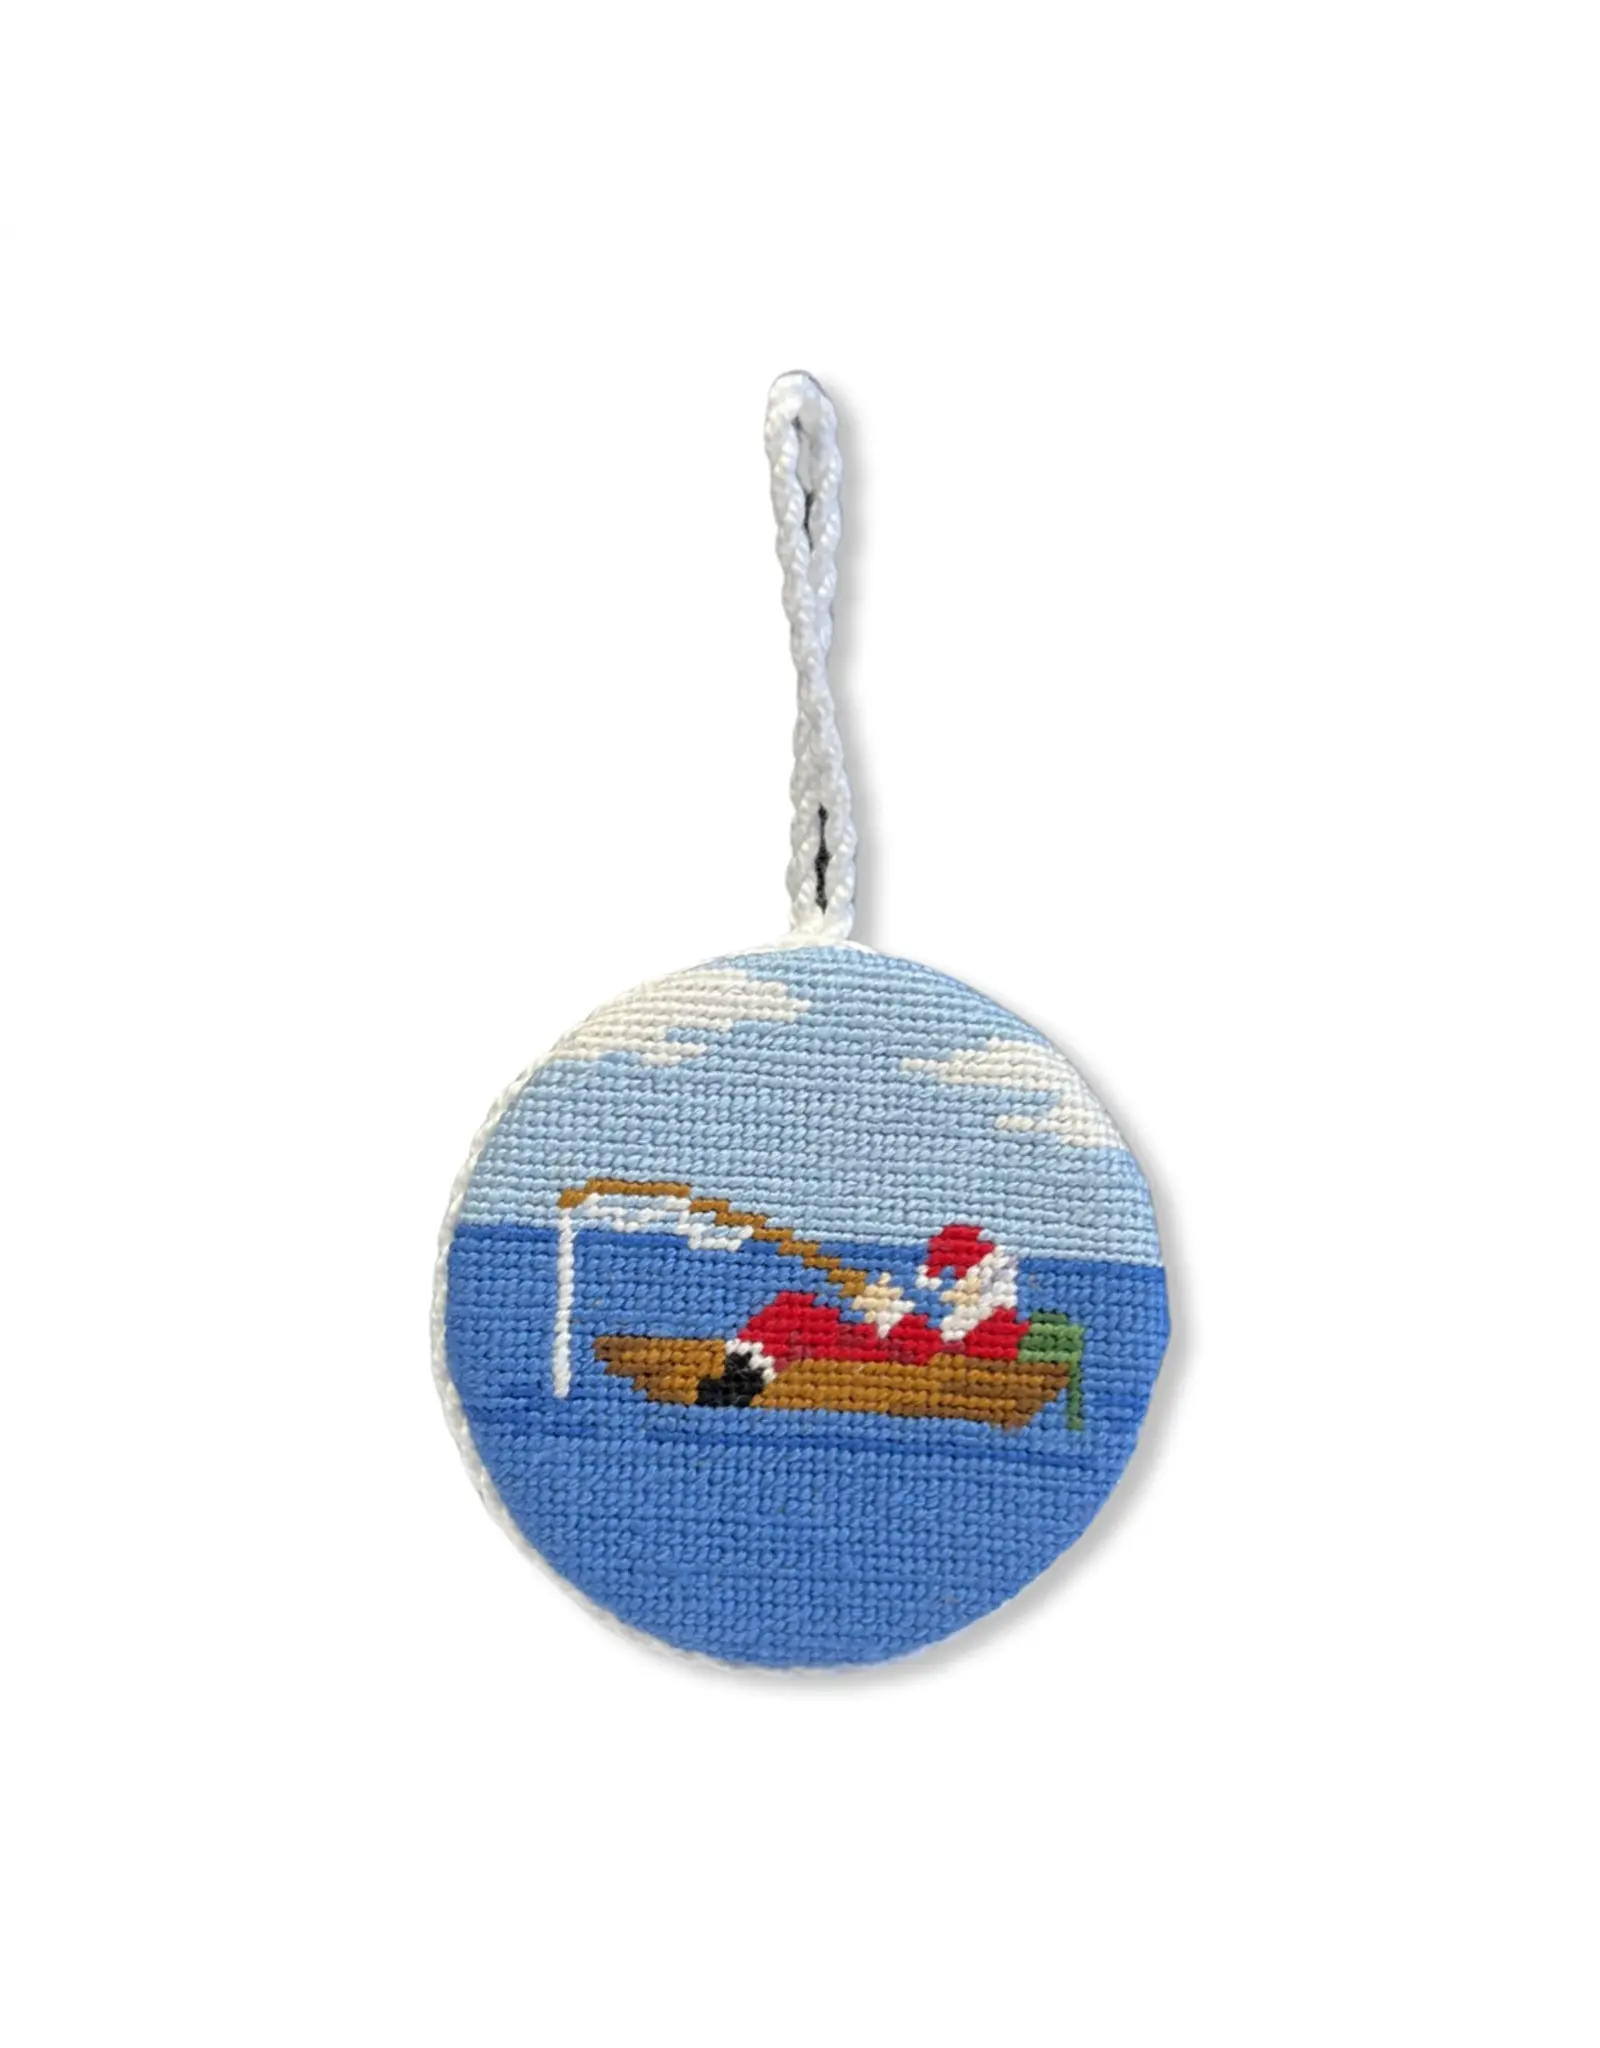 Smathers & Branson Fishing Santa Needlepoint Ornament